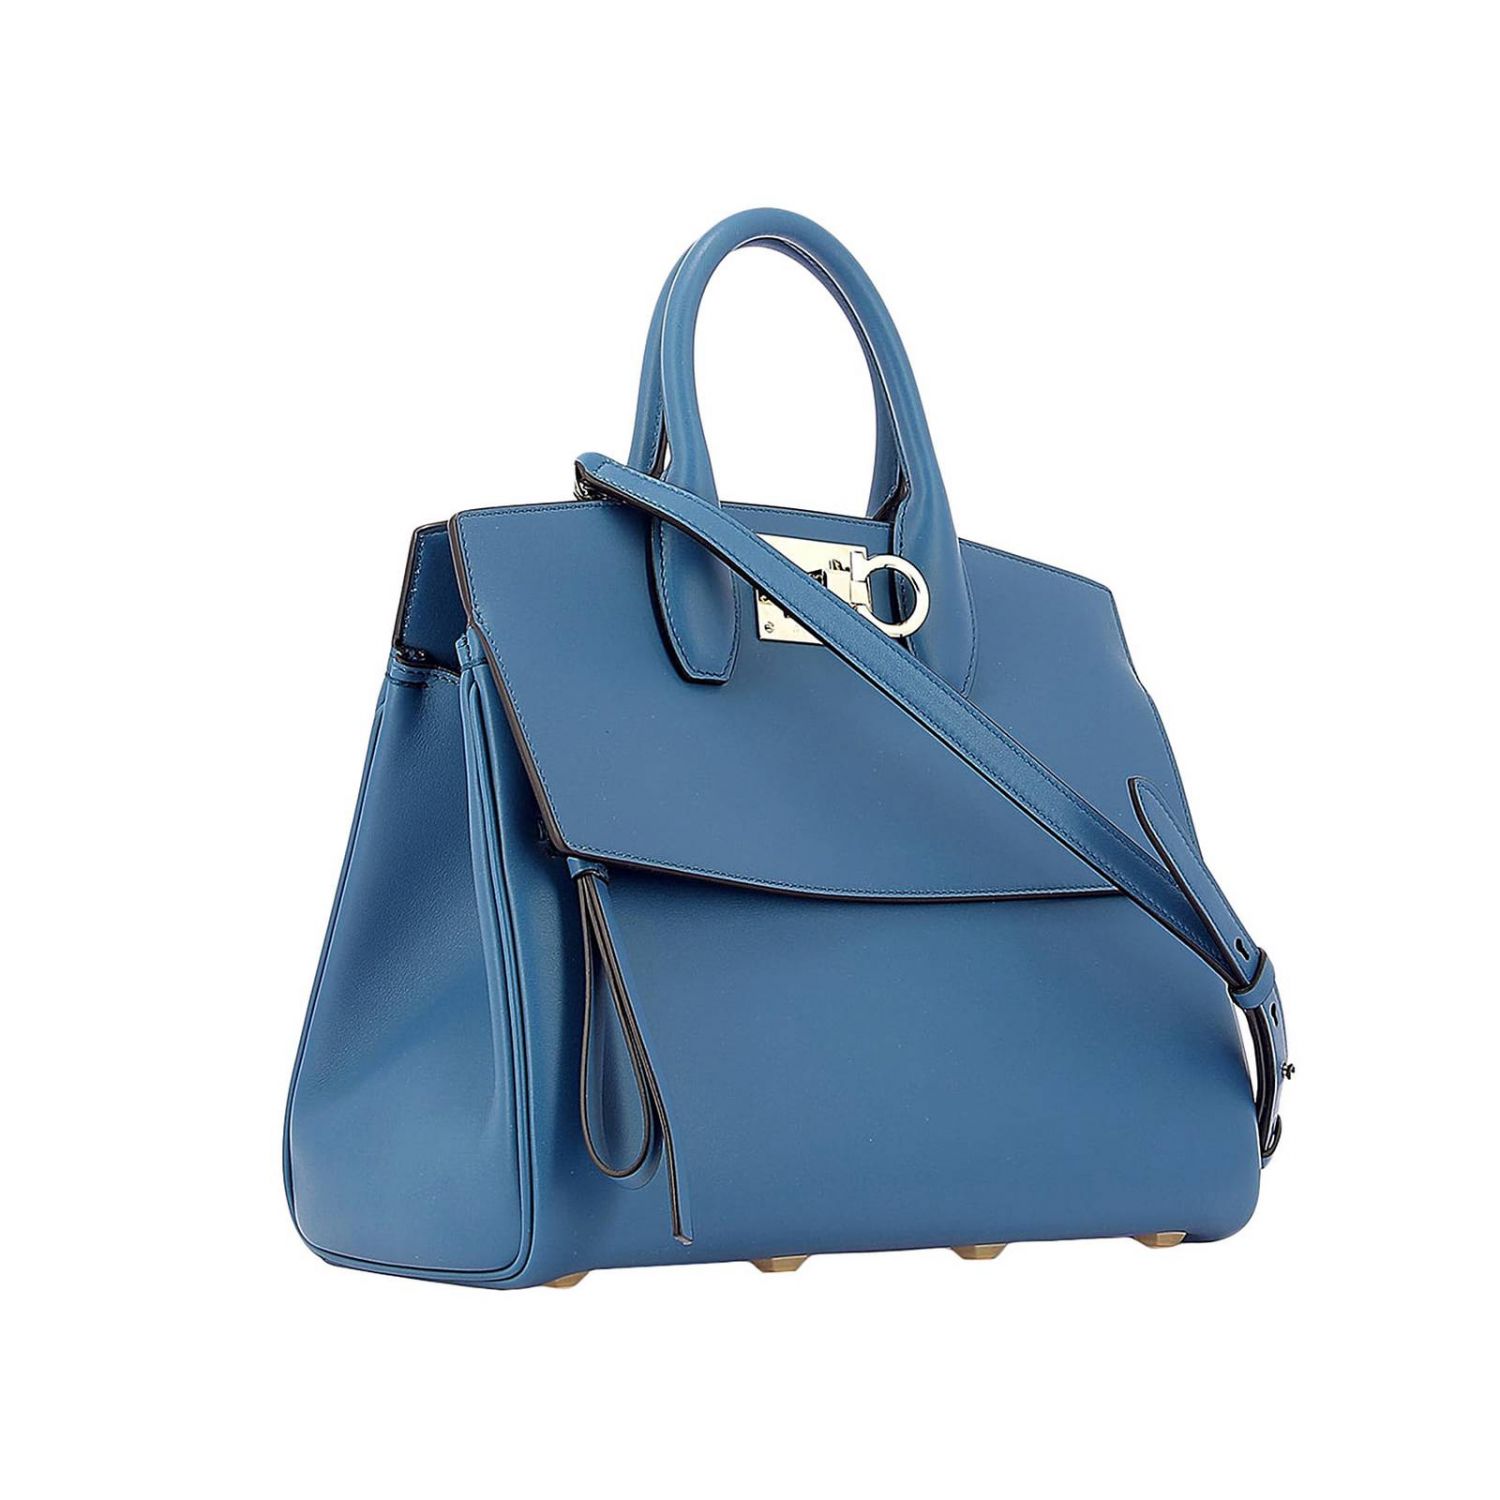 Salvatore Ferragamo Outlet: Shoulder bag women - Blue | Handbag ...